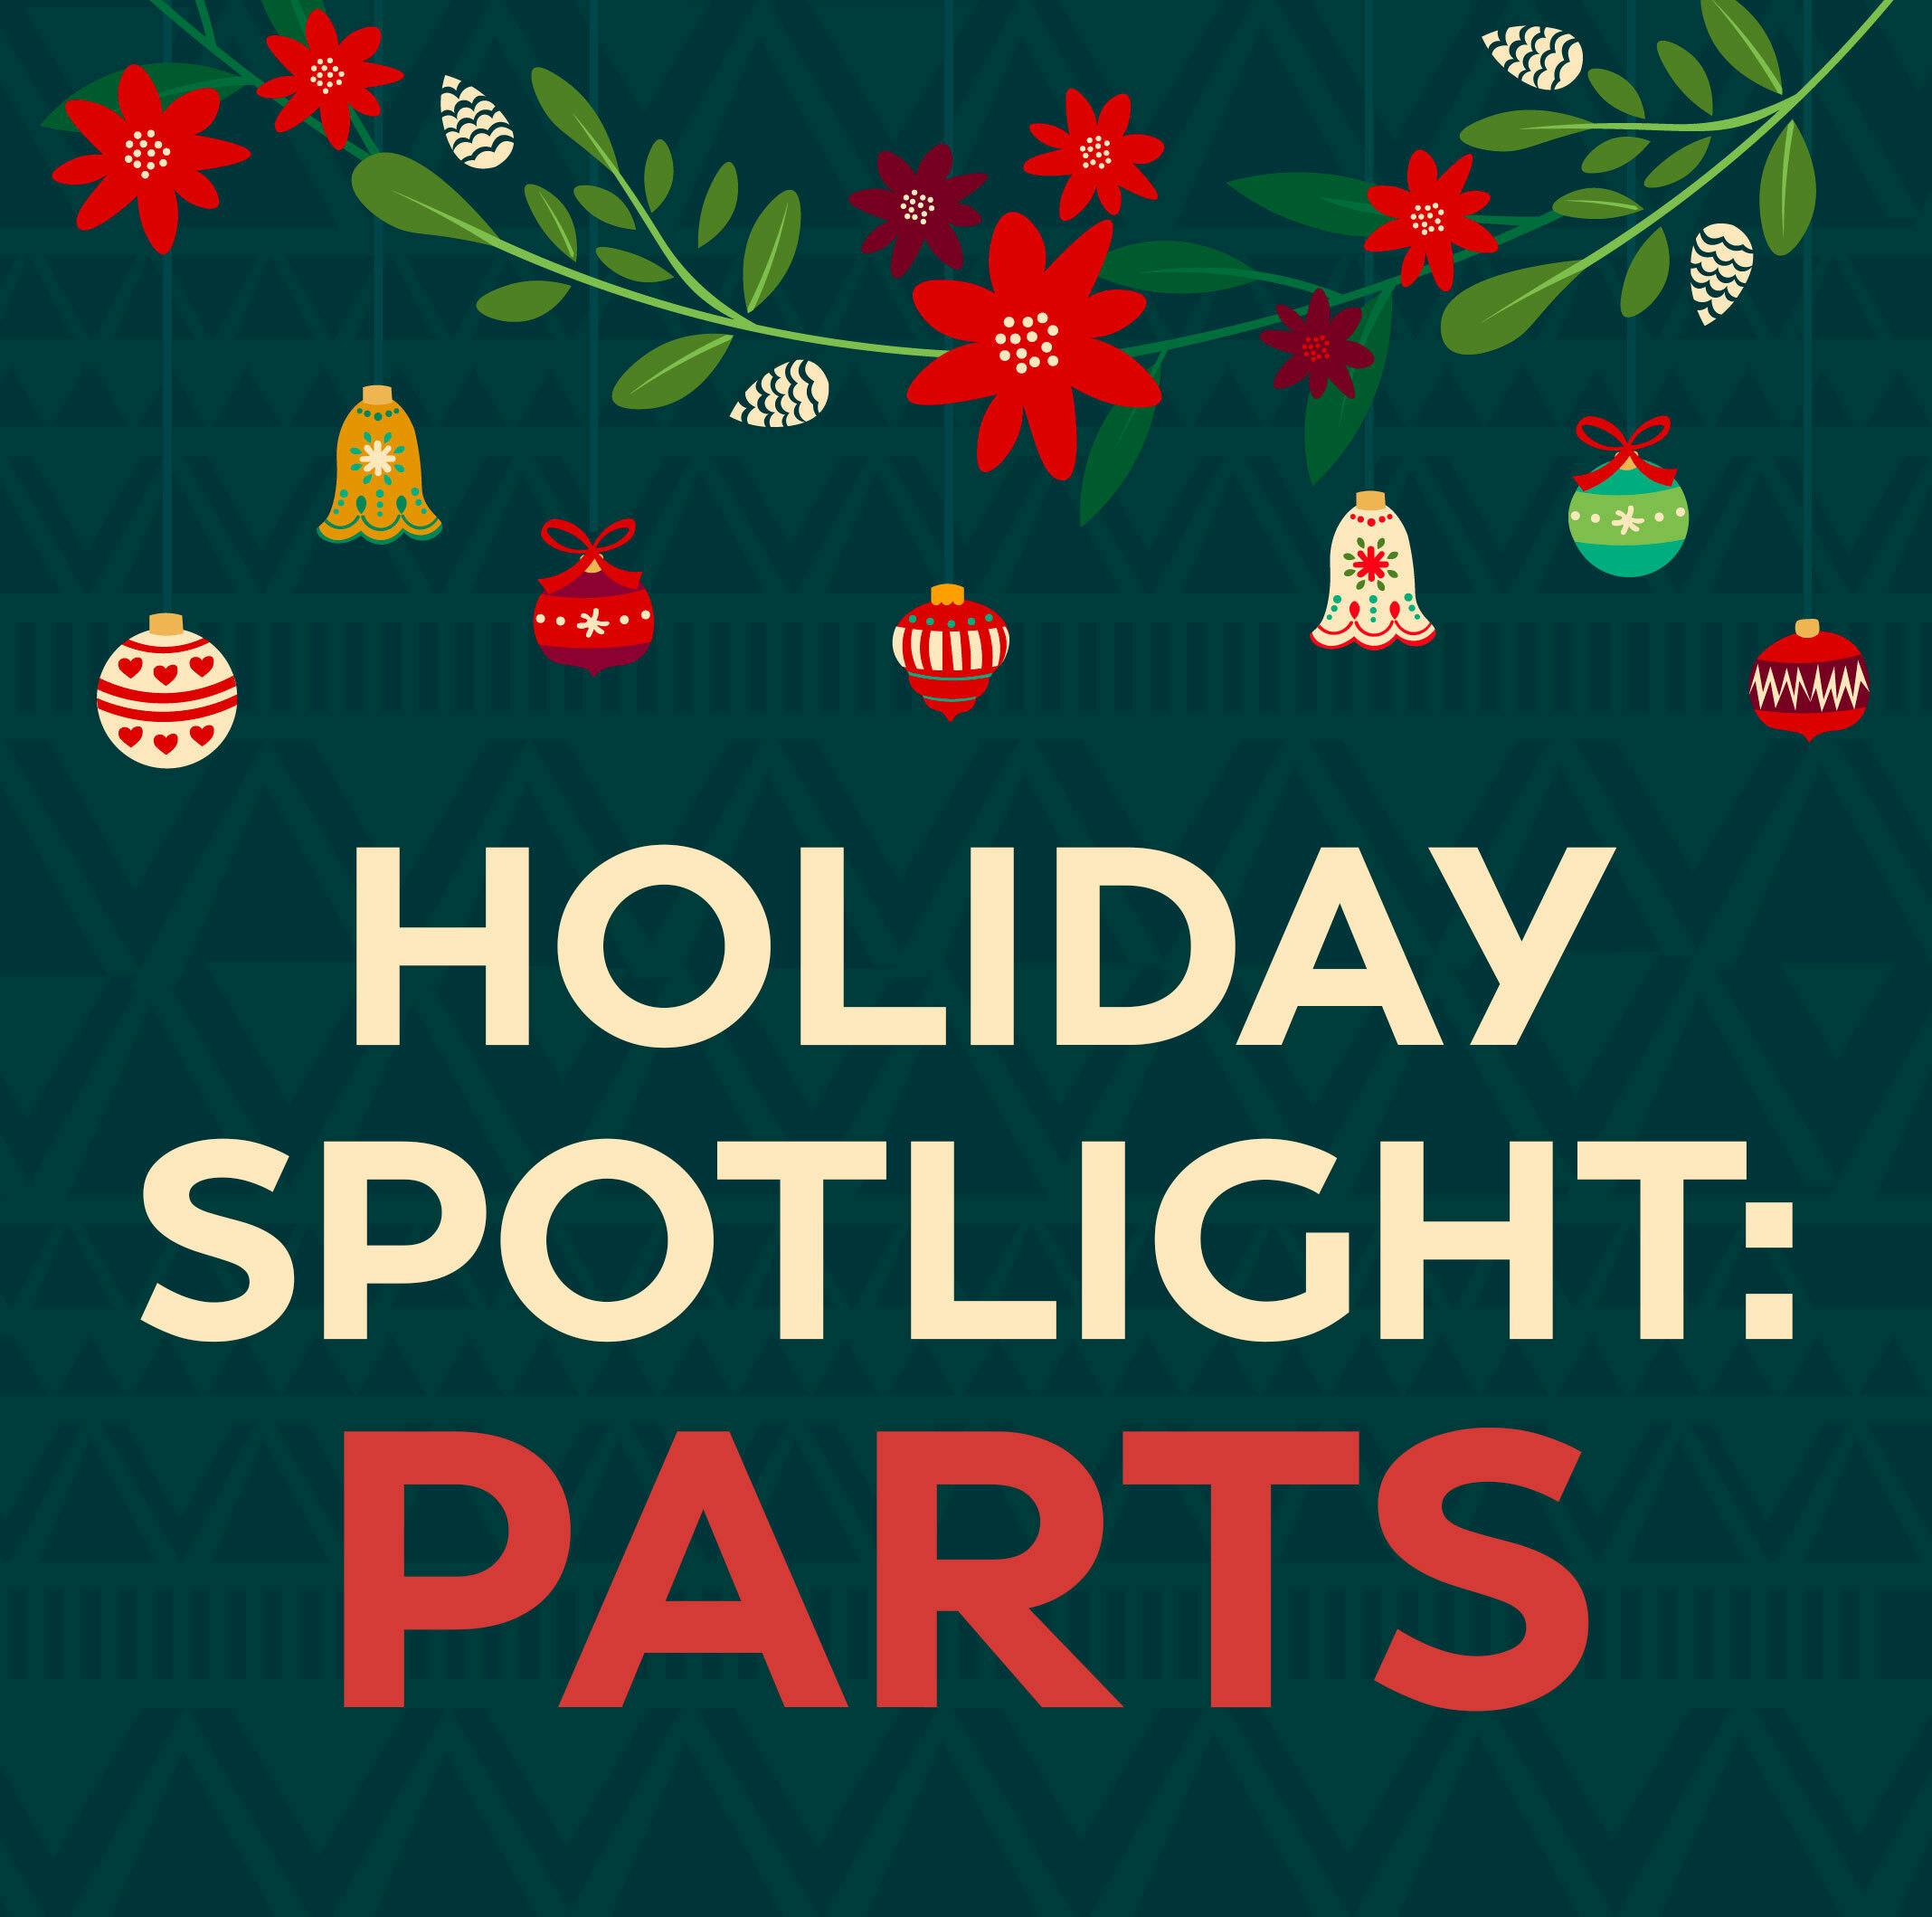 Parts Holiday Spotlights